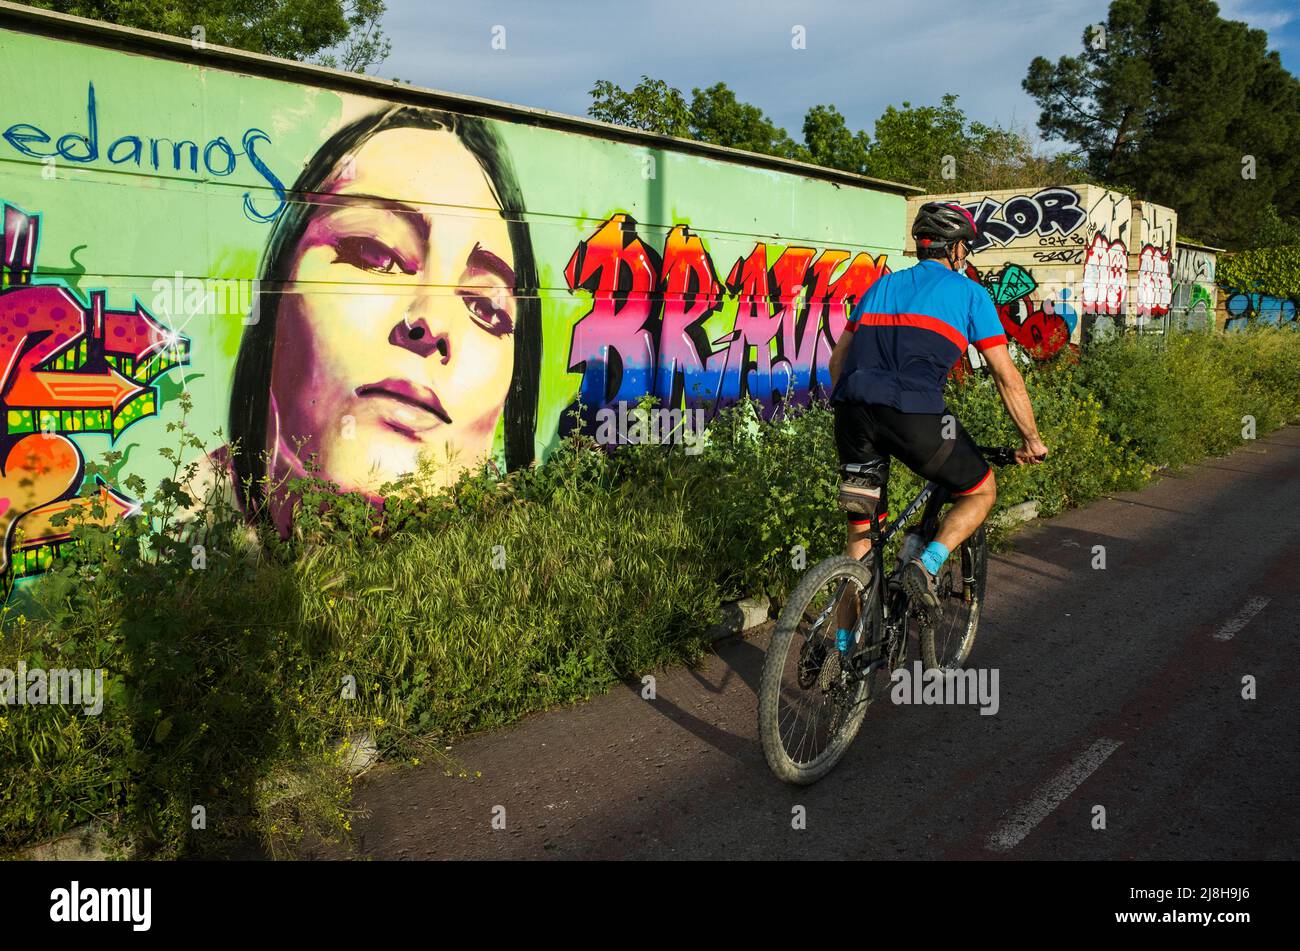 Granada, Andalusia, Spain : A cyclist on the bikeway cycles past graffiti mural by street artist El niño de las pinturas. Stock Photo